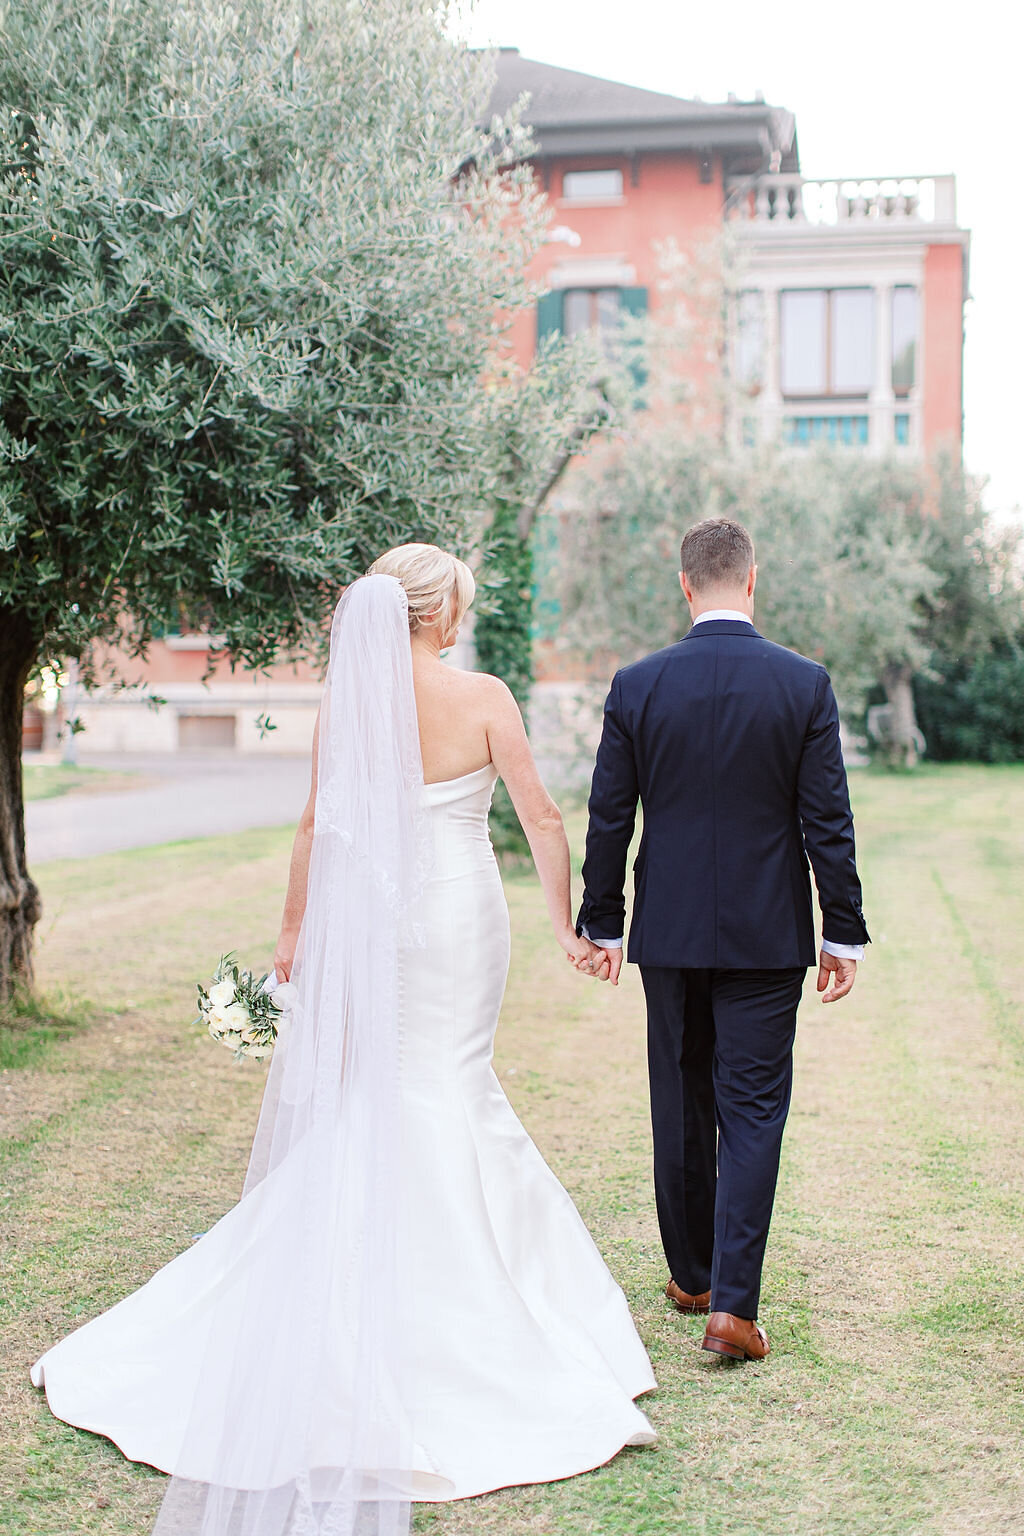 Destination Weddings | Twelfth Night Events - Italy Wedding Planner48